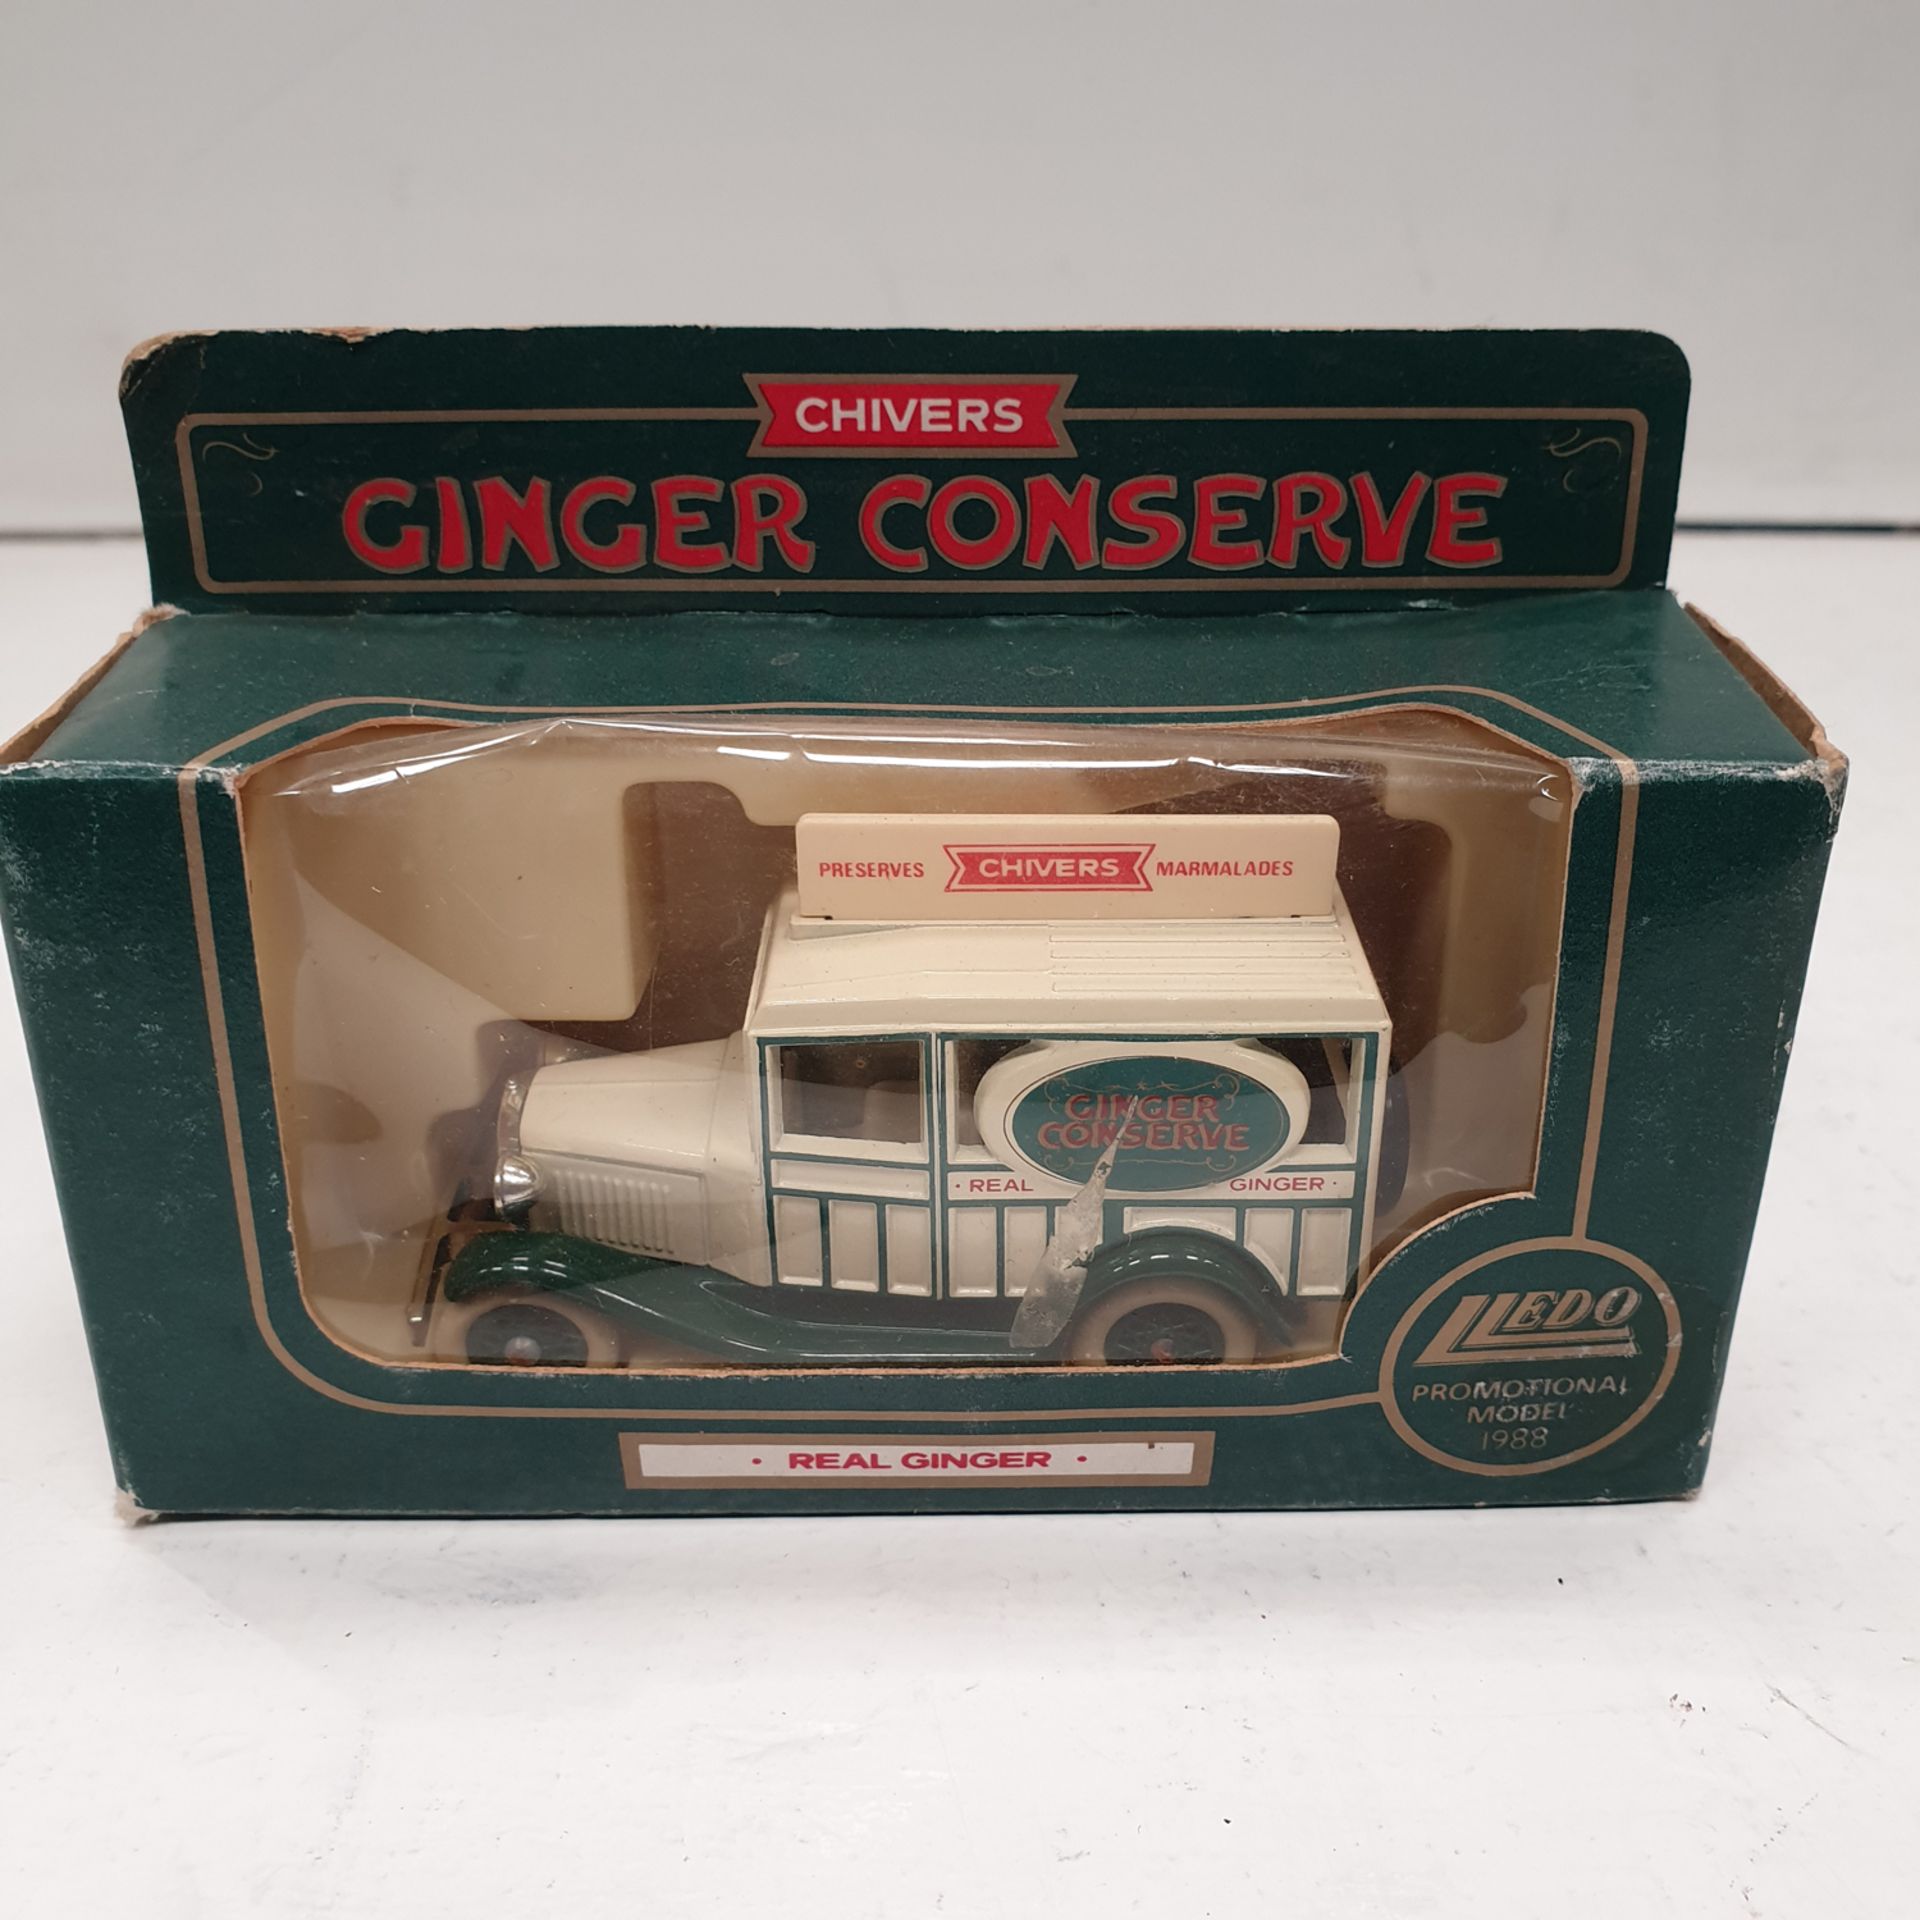 Lledo (London) Limited Promotional Model 'Chivers Ginger Conserve' Car Model.